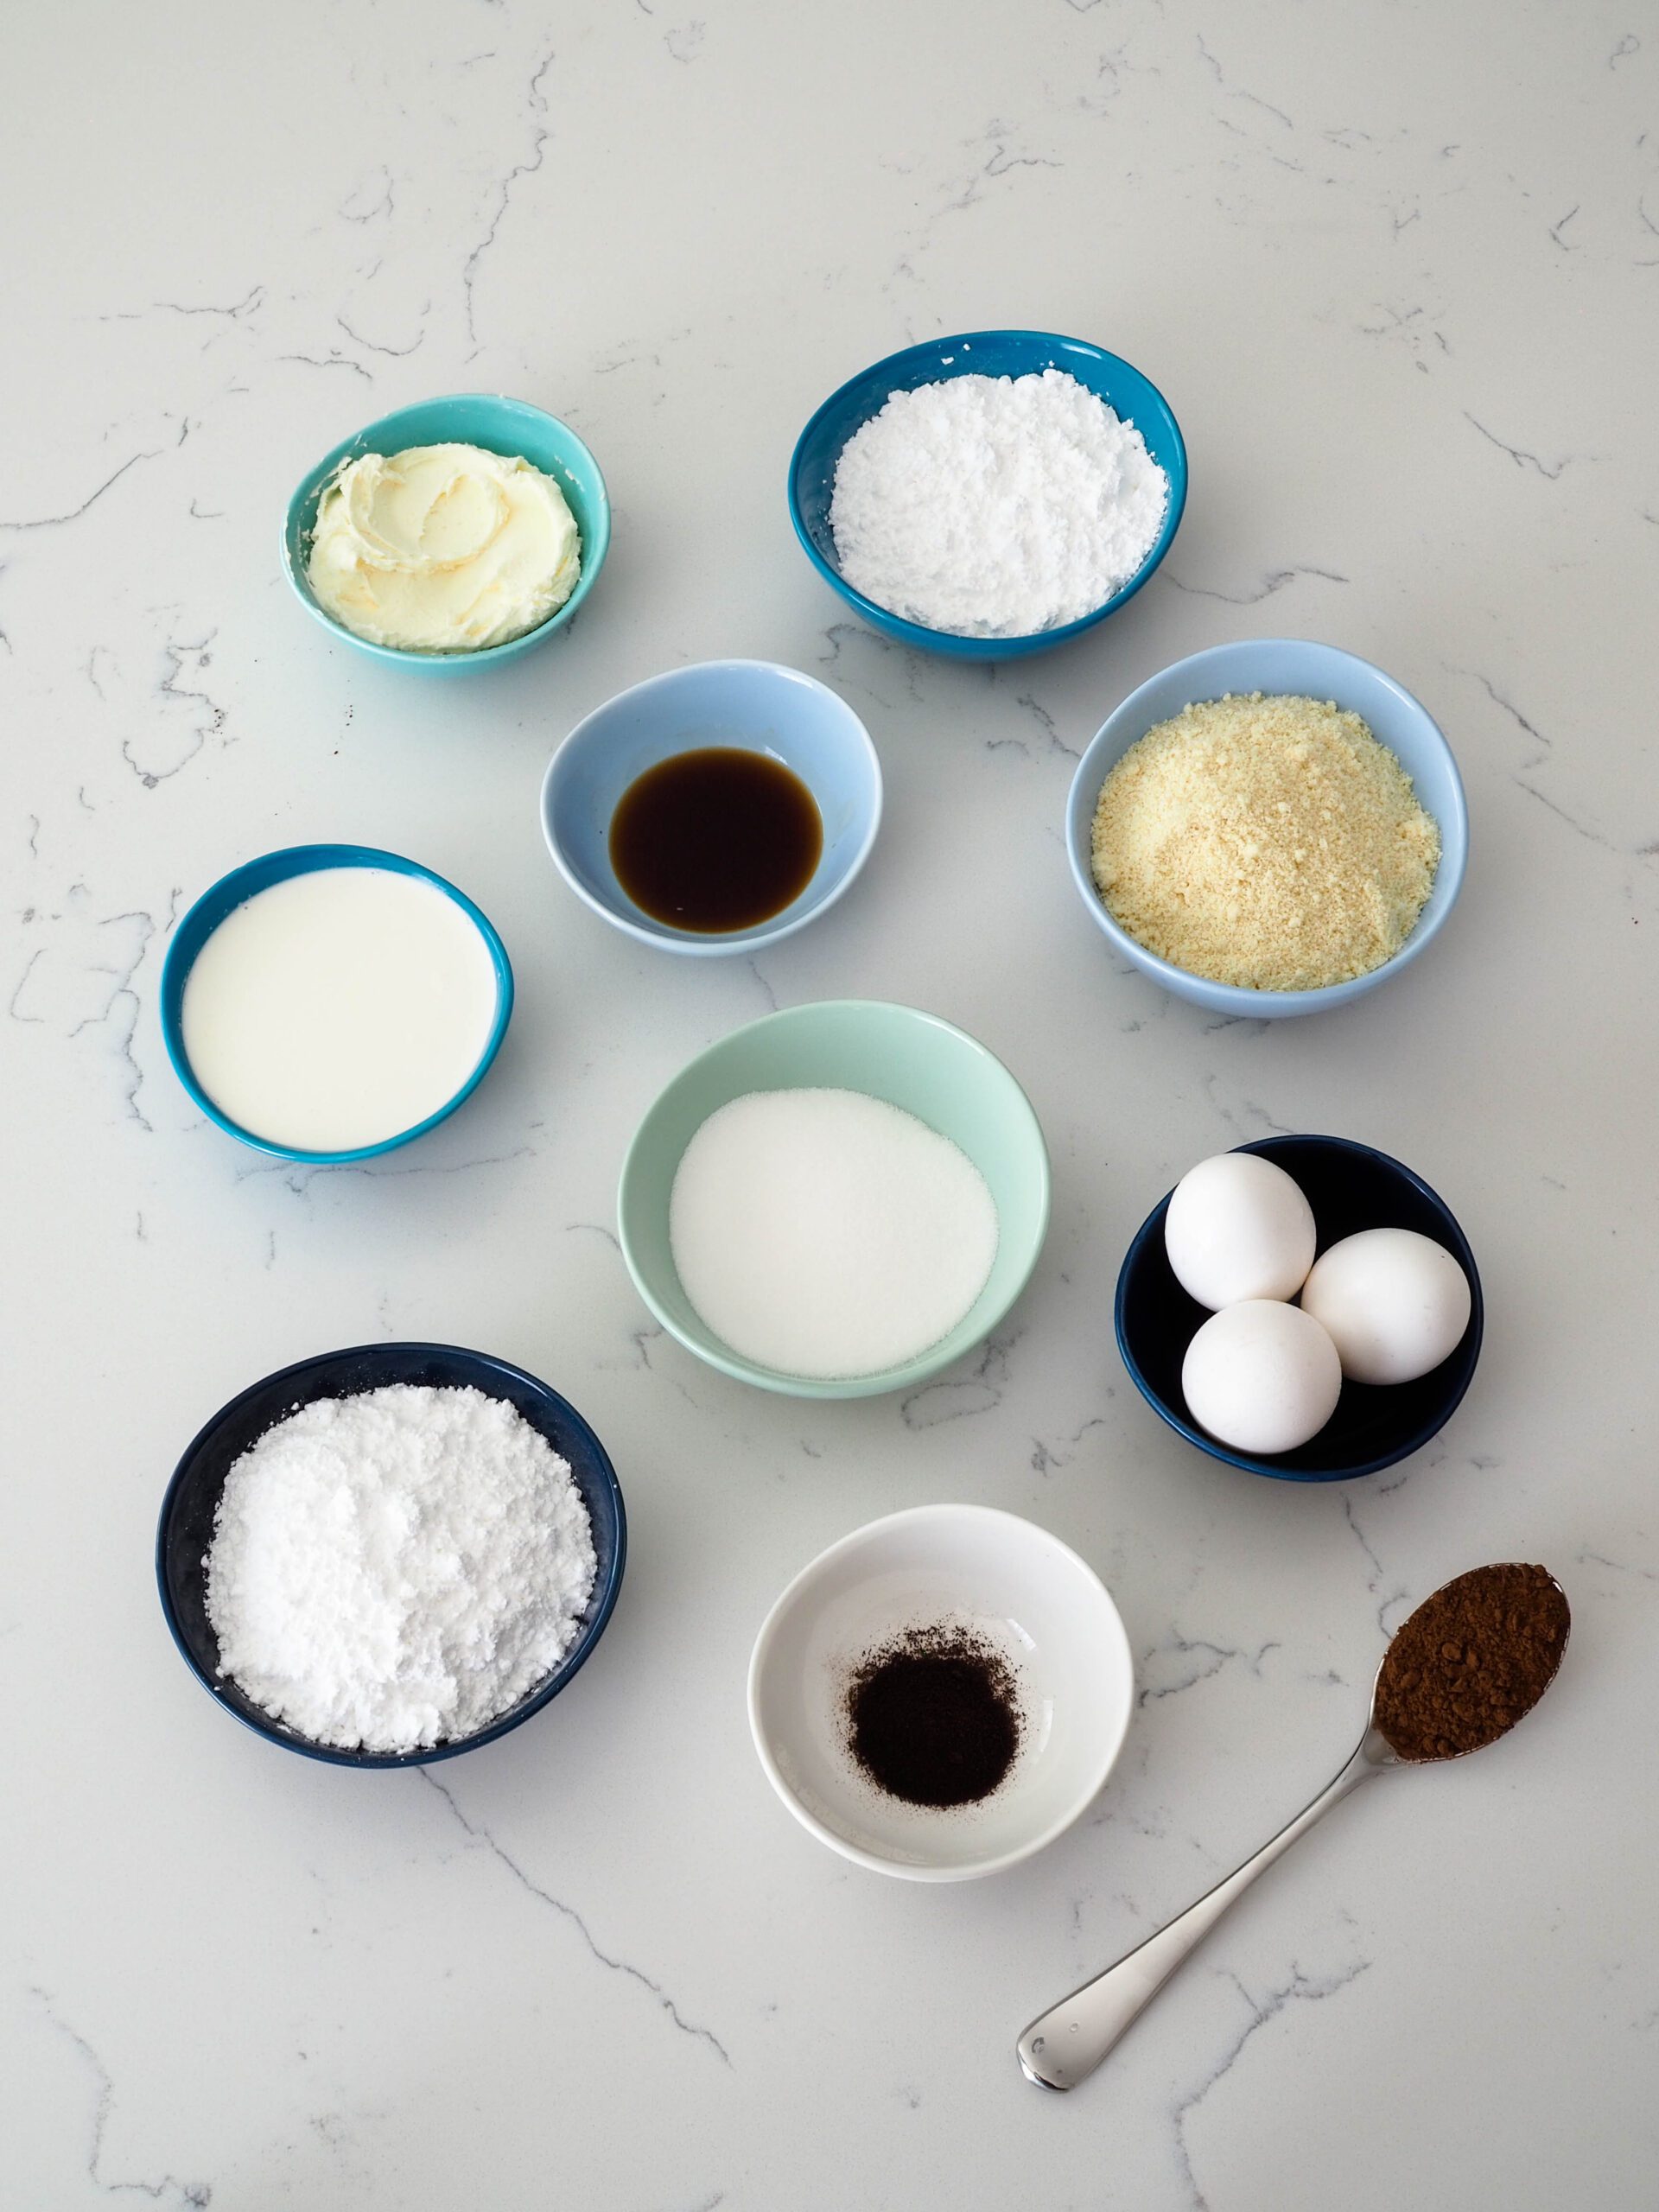 All the ingredients you need to make tiramisu macarons.